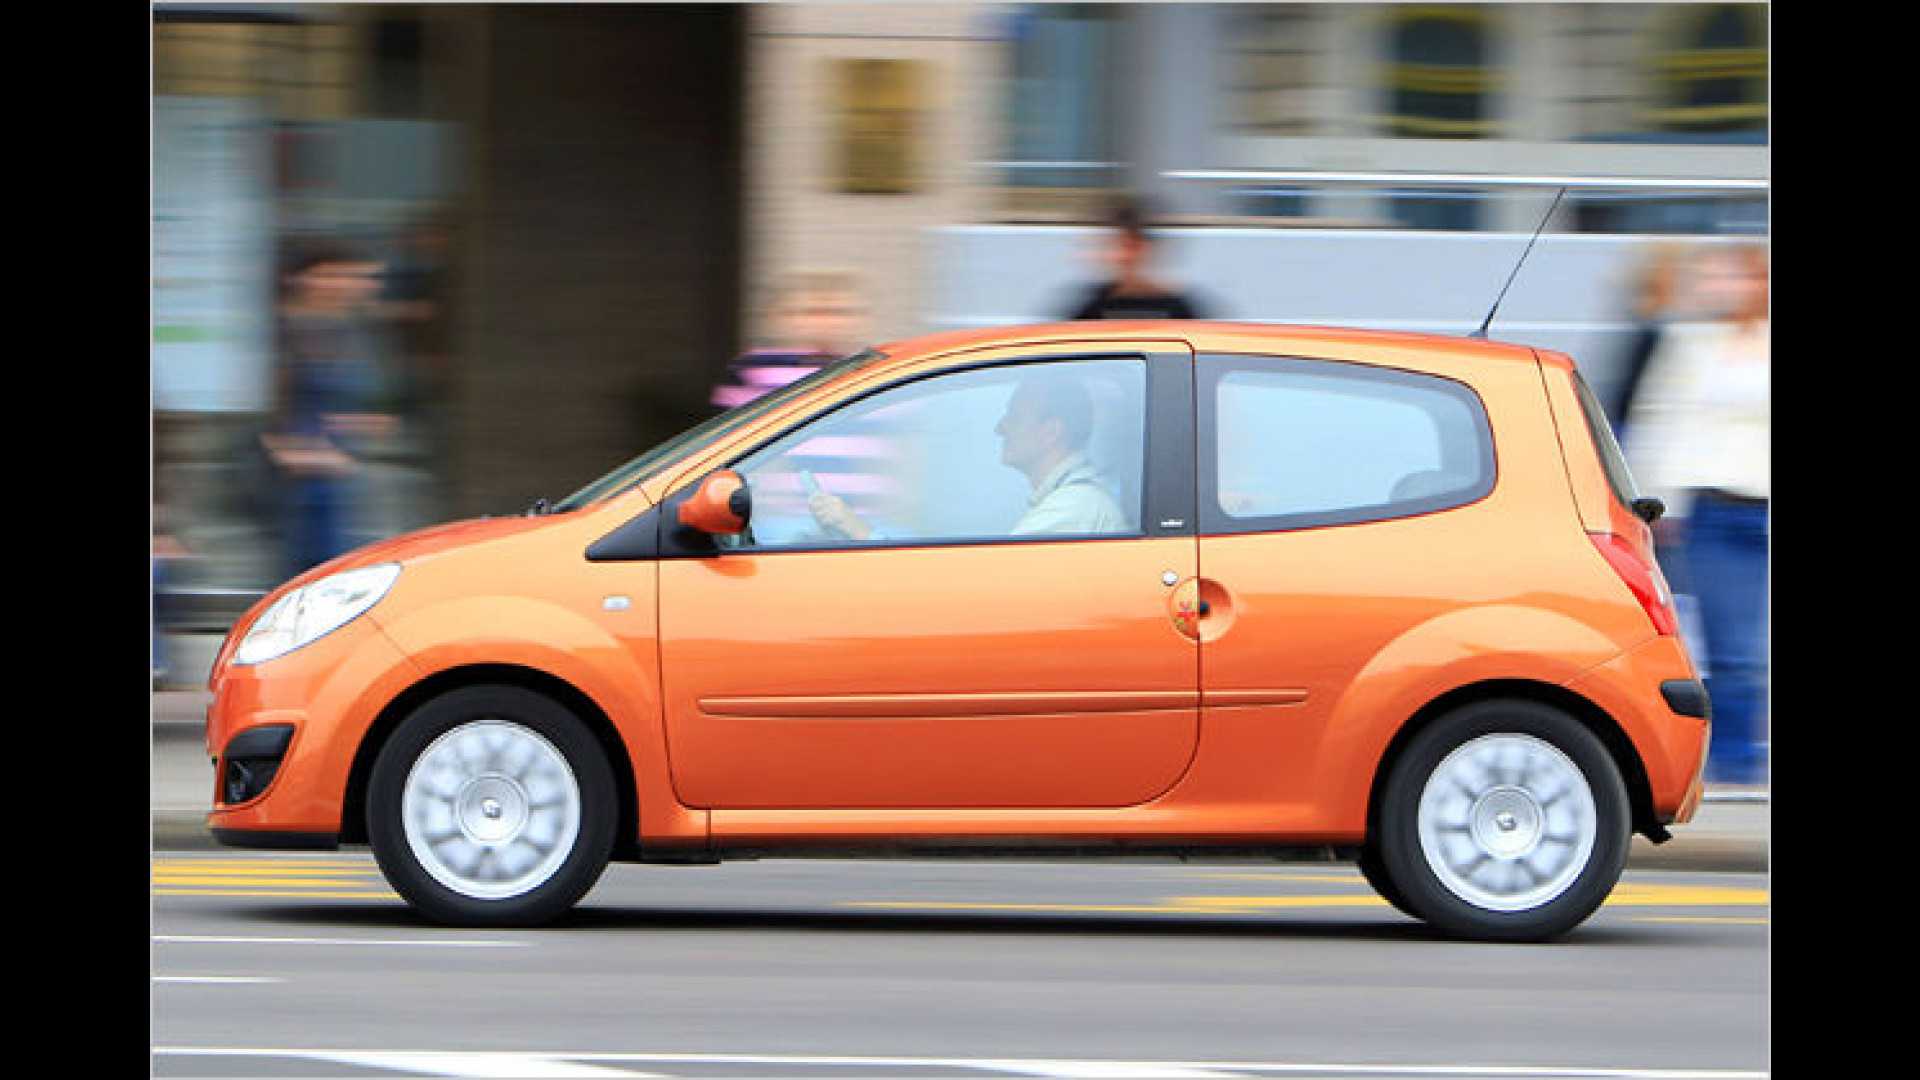 Renault Twingo знакомство с автомобилем платформа двигатель фото видео